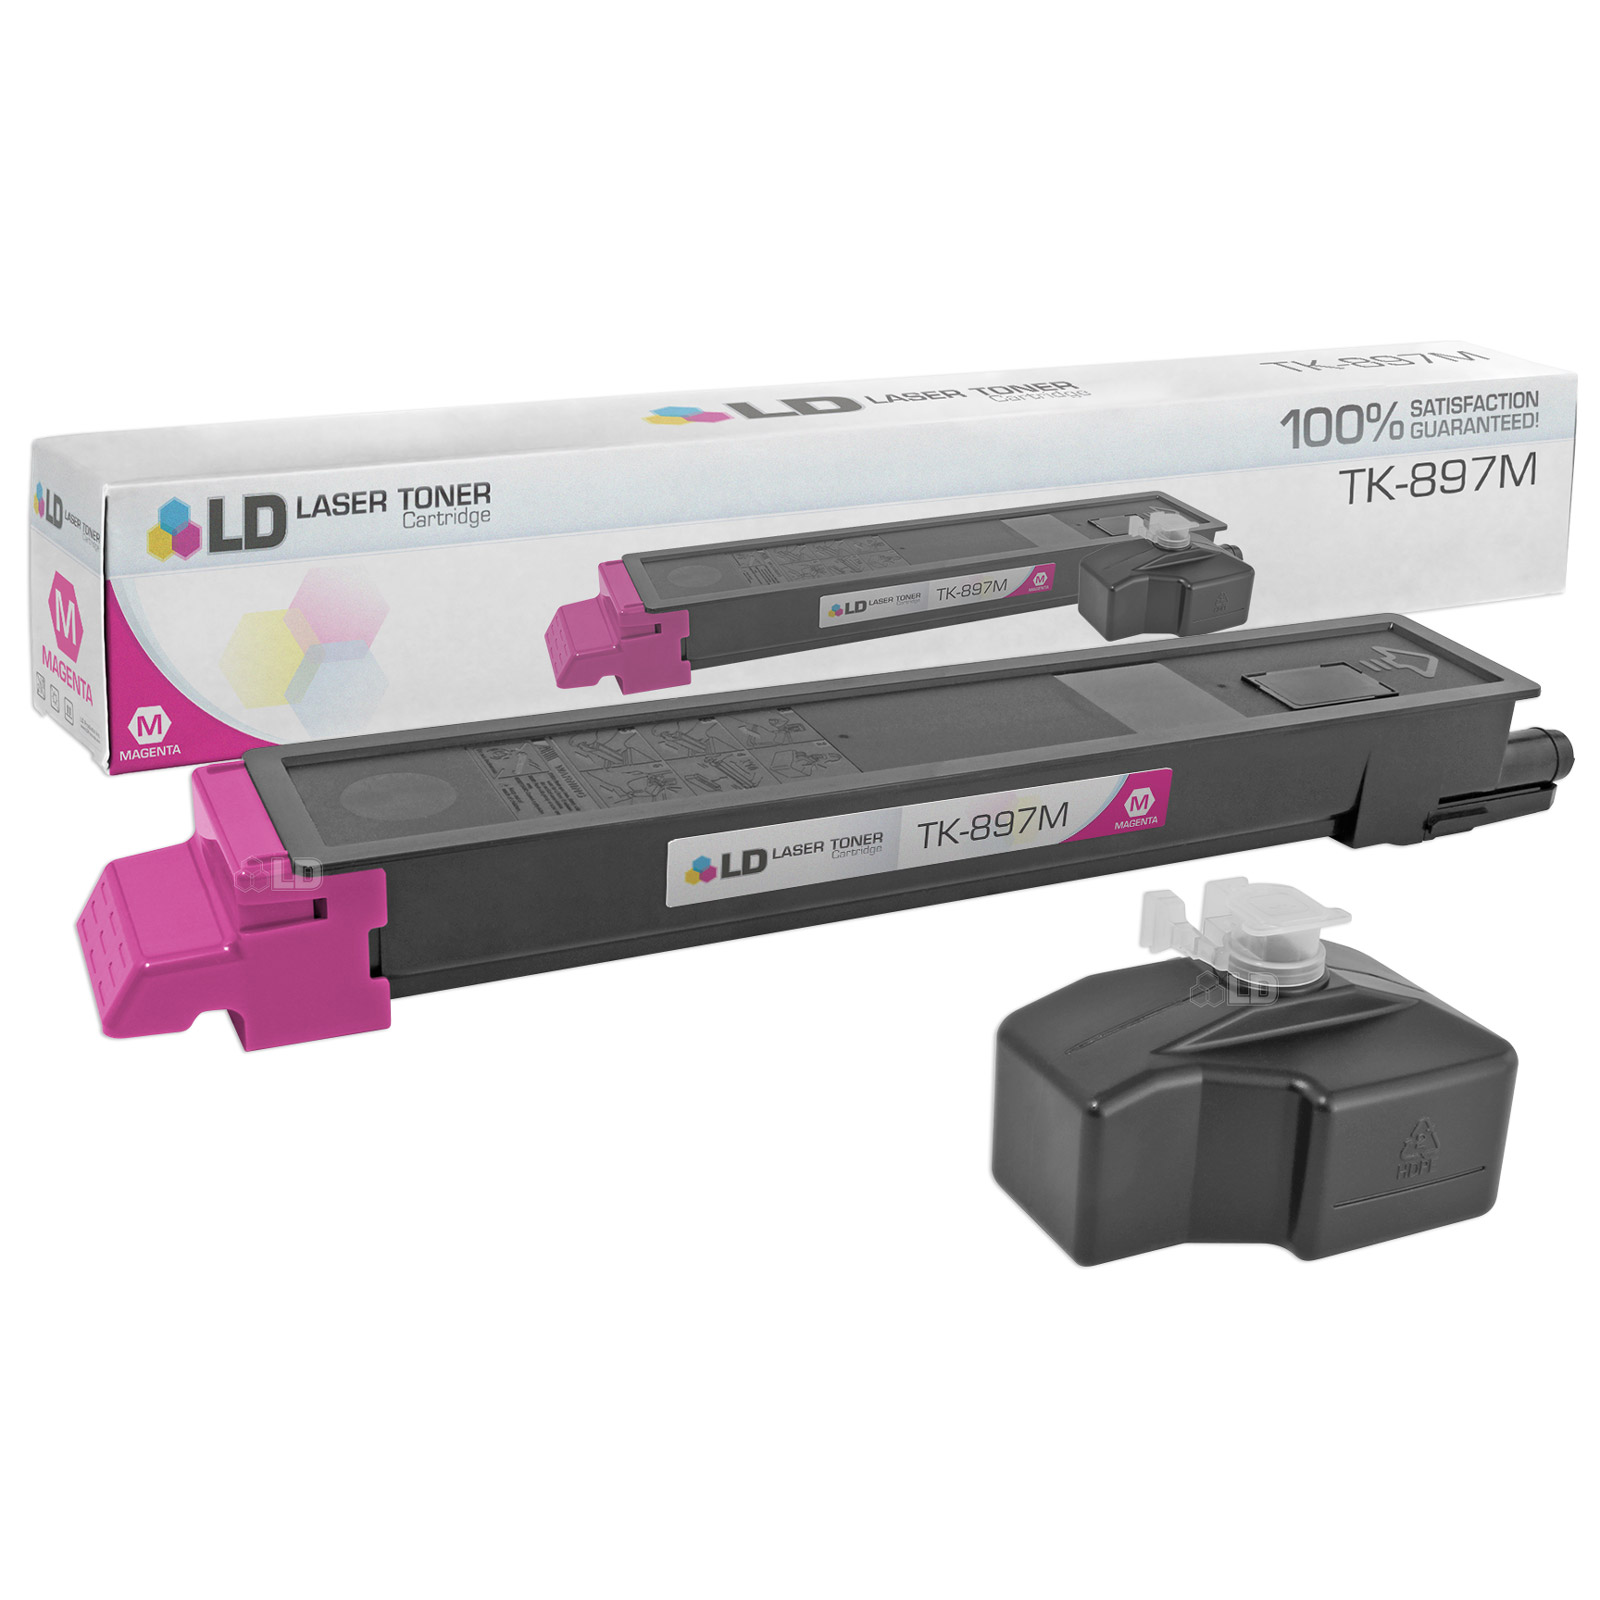 LD Compatible Replacement for Kyocera-Mita TK-897M Magenta Laser Toner Cartridge for use in Kyocera-Mita TASKalfa 205c, 255, 255c, FS-C8520MFP, and FS-C8525MFP s - image 1 of 1